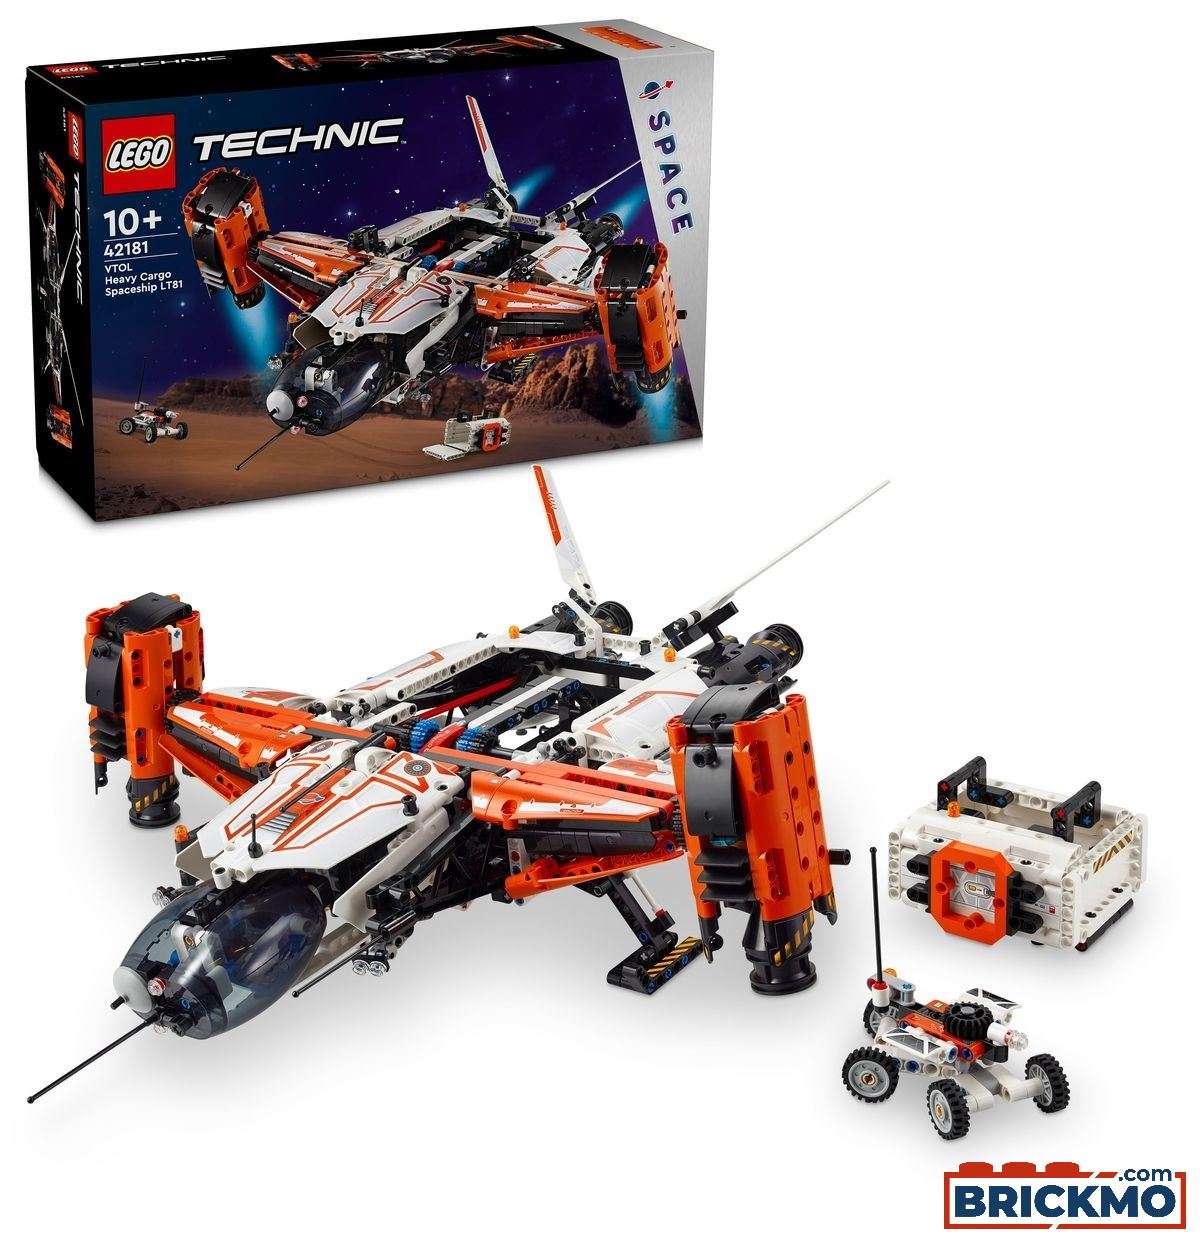 LEGO Technic 42181 VTOL Heavy Cargo Spaceship LT81 42181